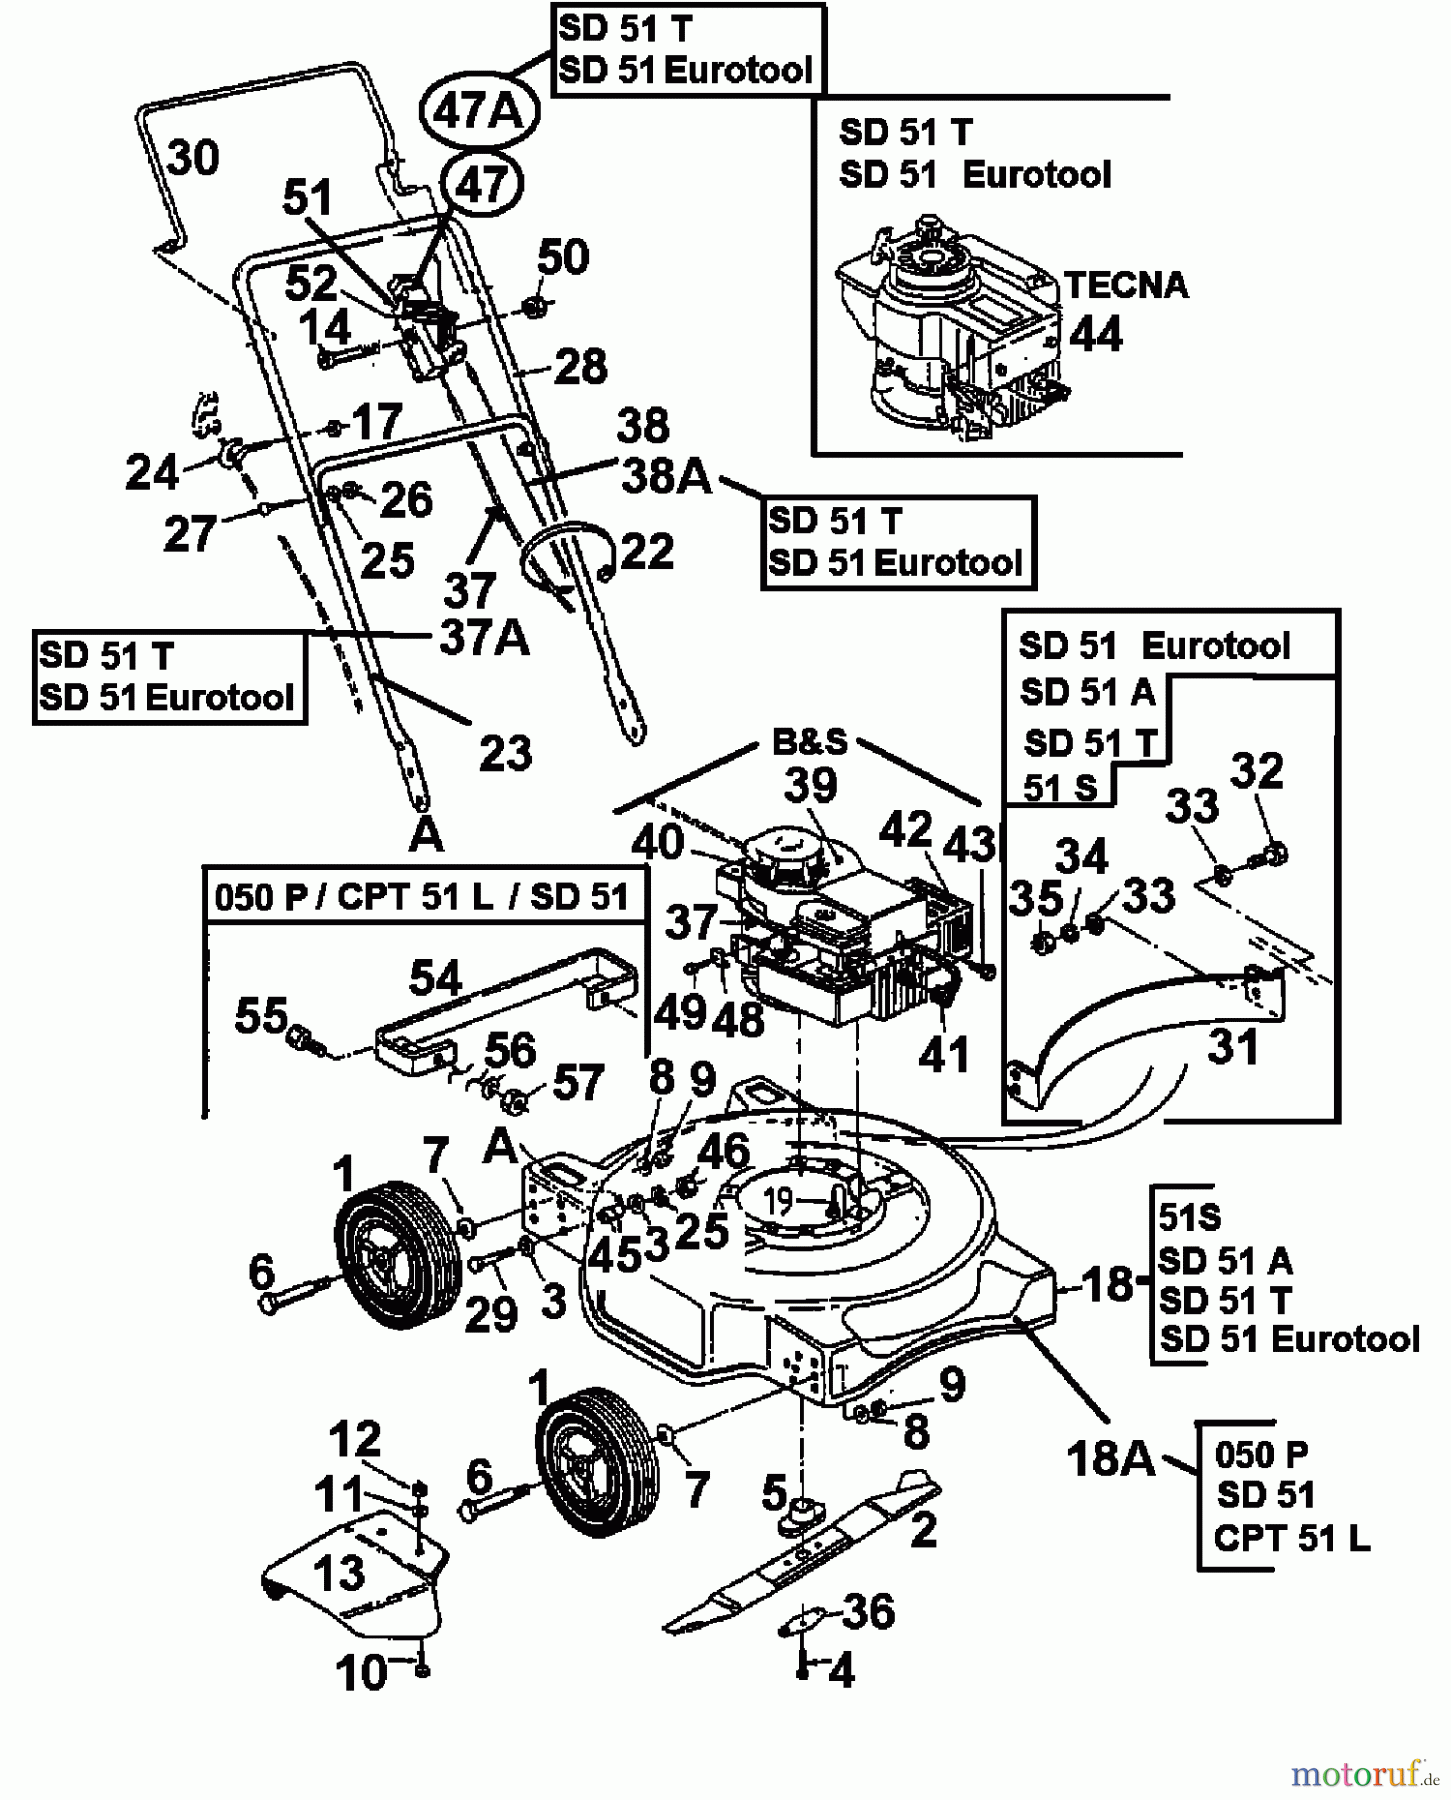  Central Park Petrol mower CPT 51 L 11A-050A641  (1998) Basic machine